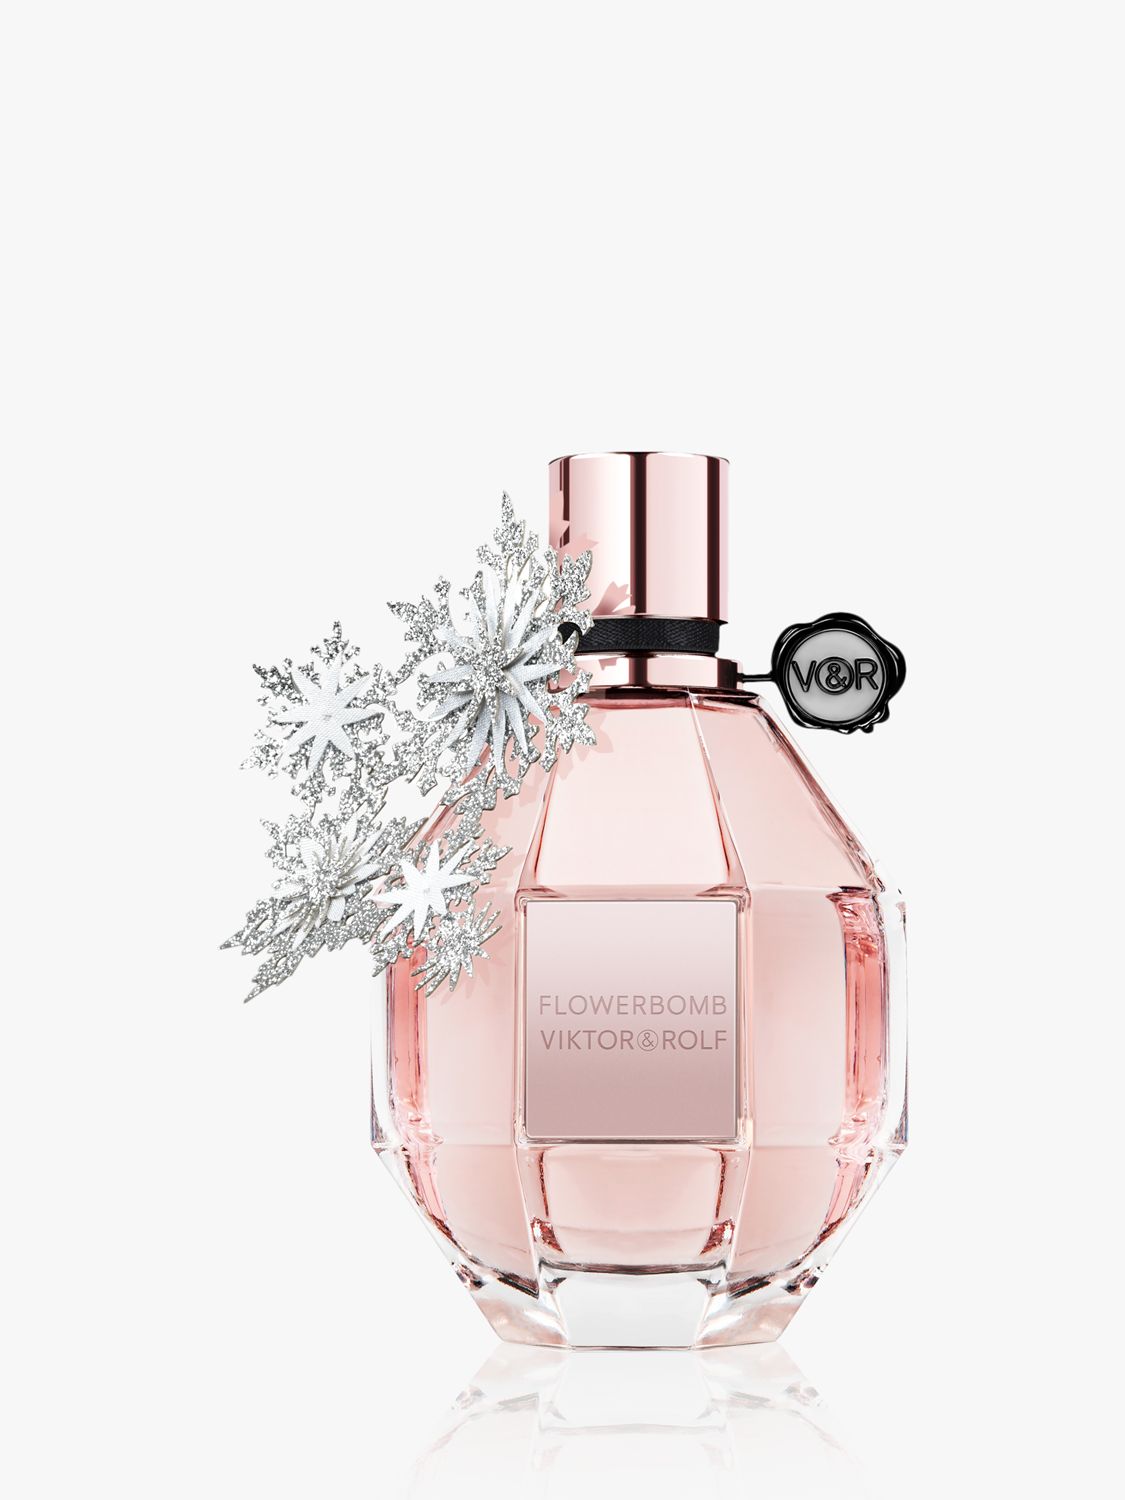 Viktor Rolf Flowerbomb Eau De Parfum 100ml Limited Edition At John Lewis Partners